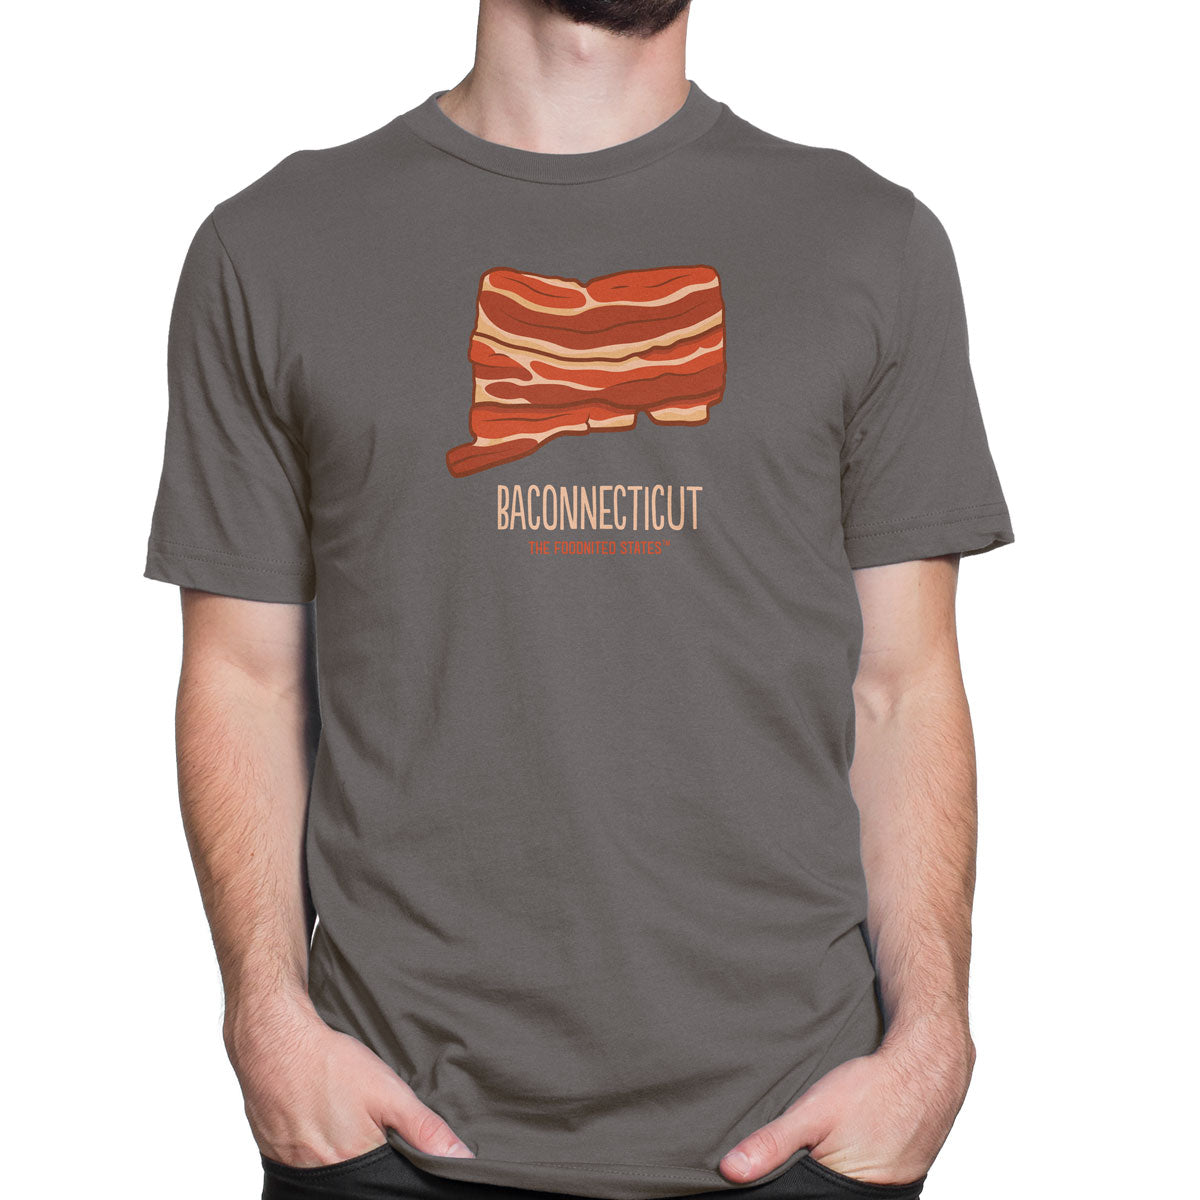 T-shirt, Men's/Unisex - Foodnited States